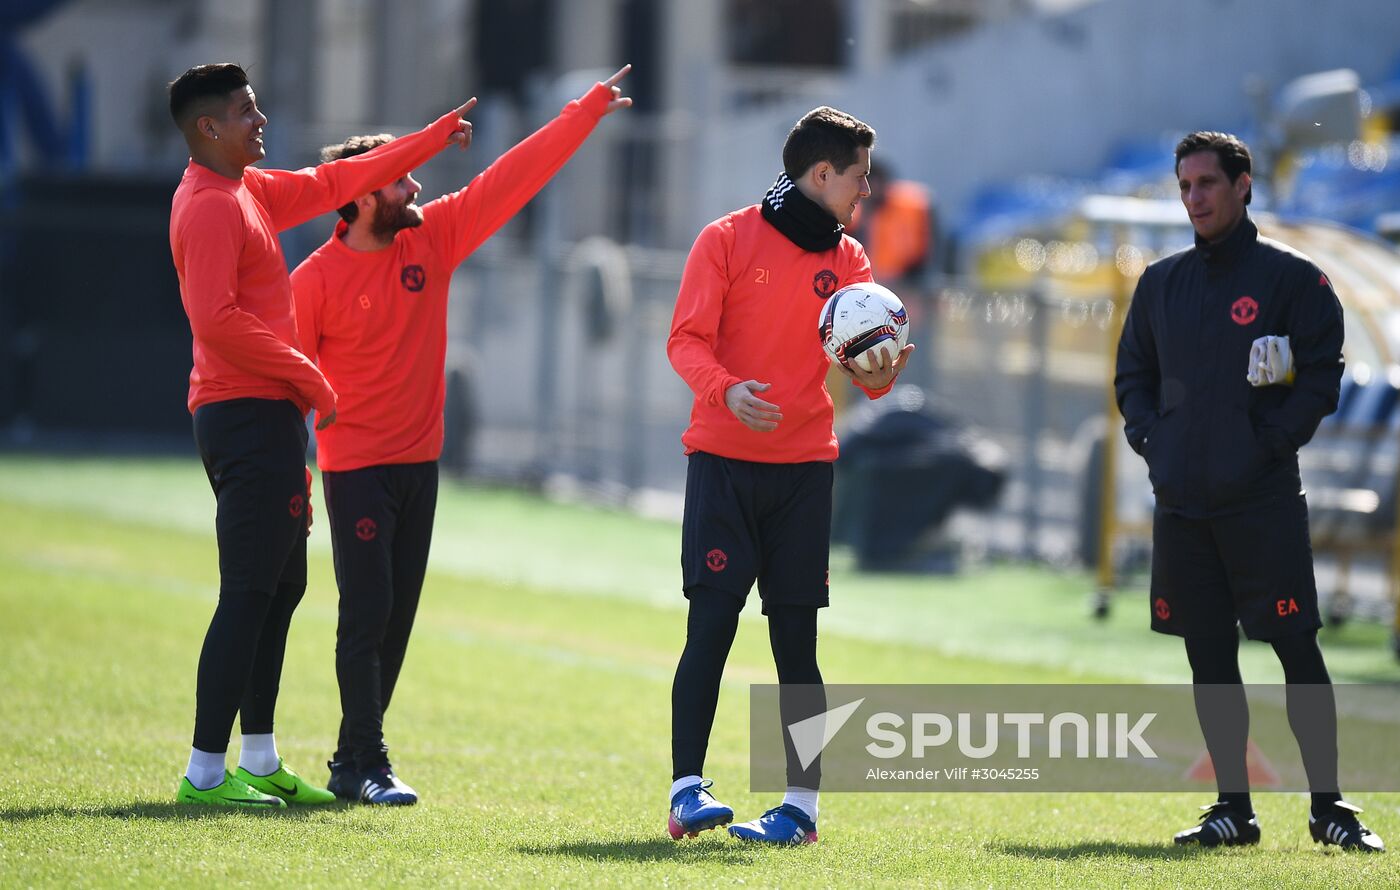 UEFA Europa League. FC Manchester United holds training session